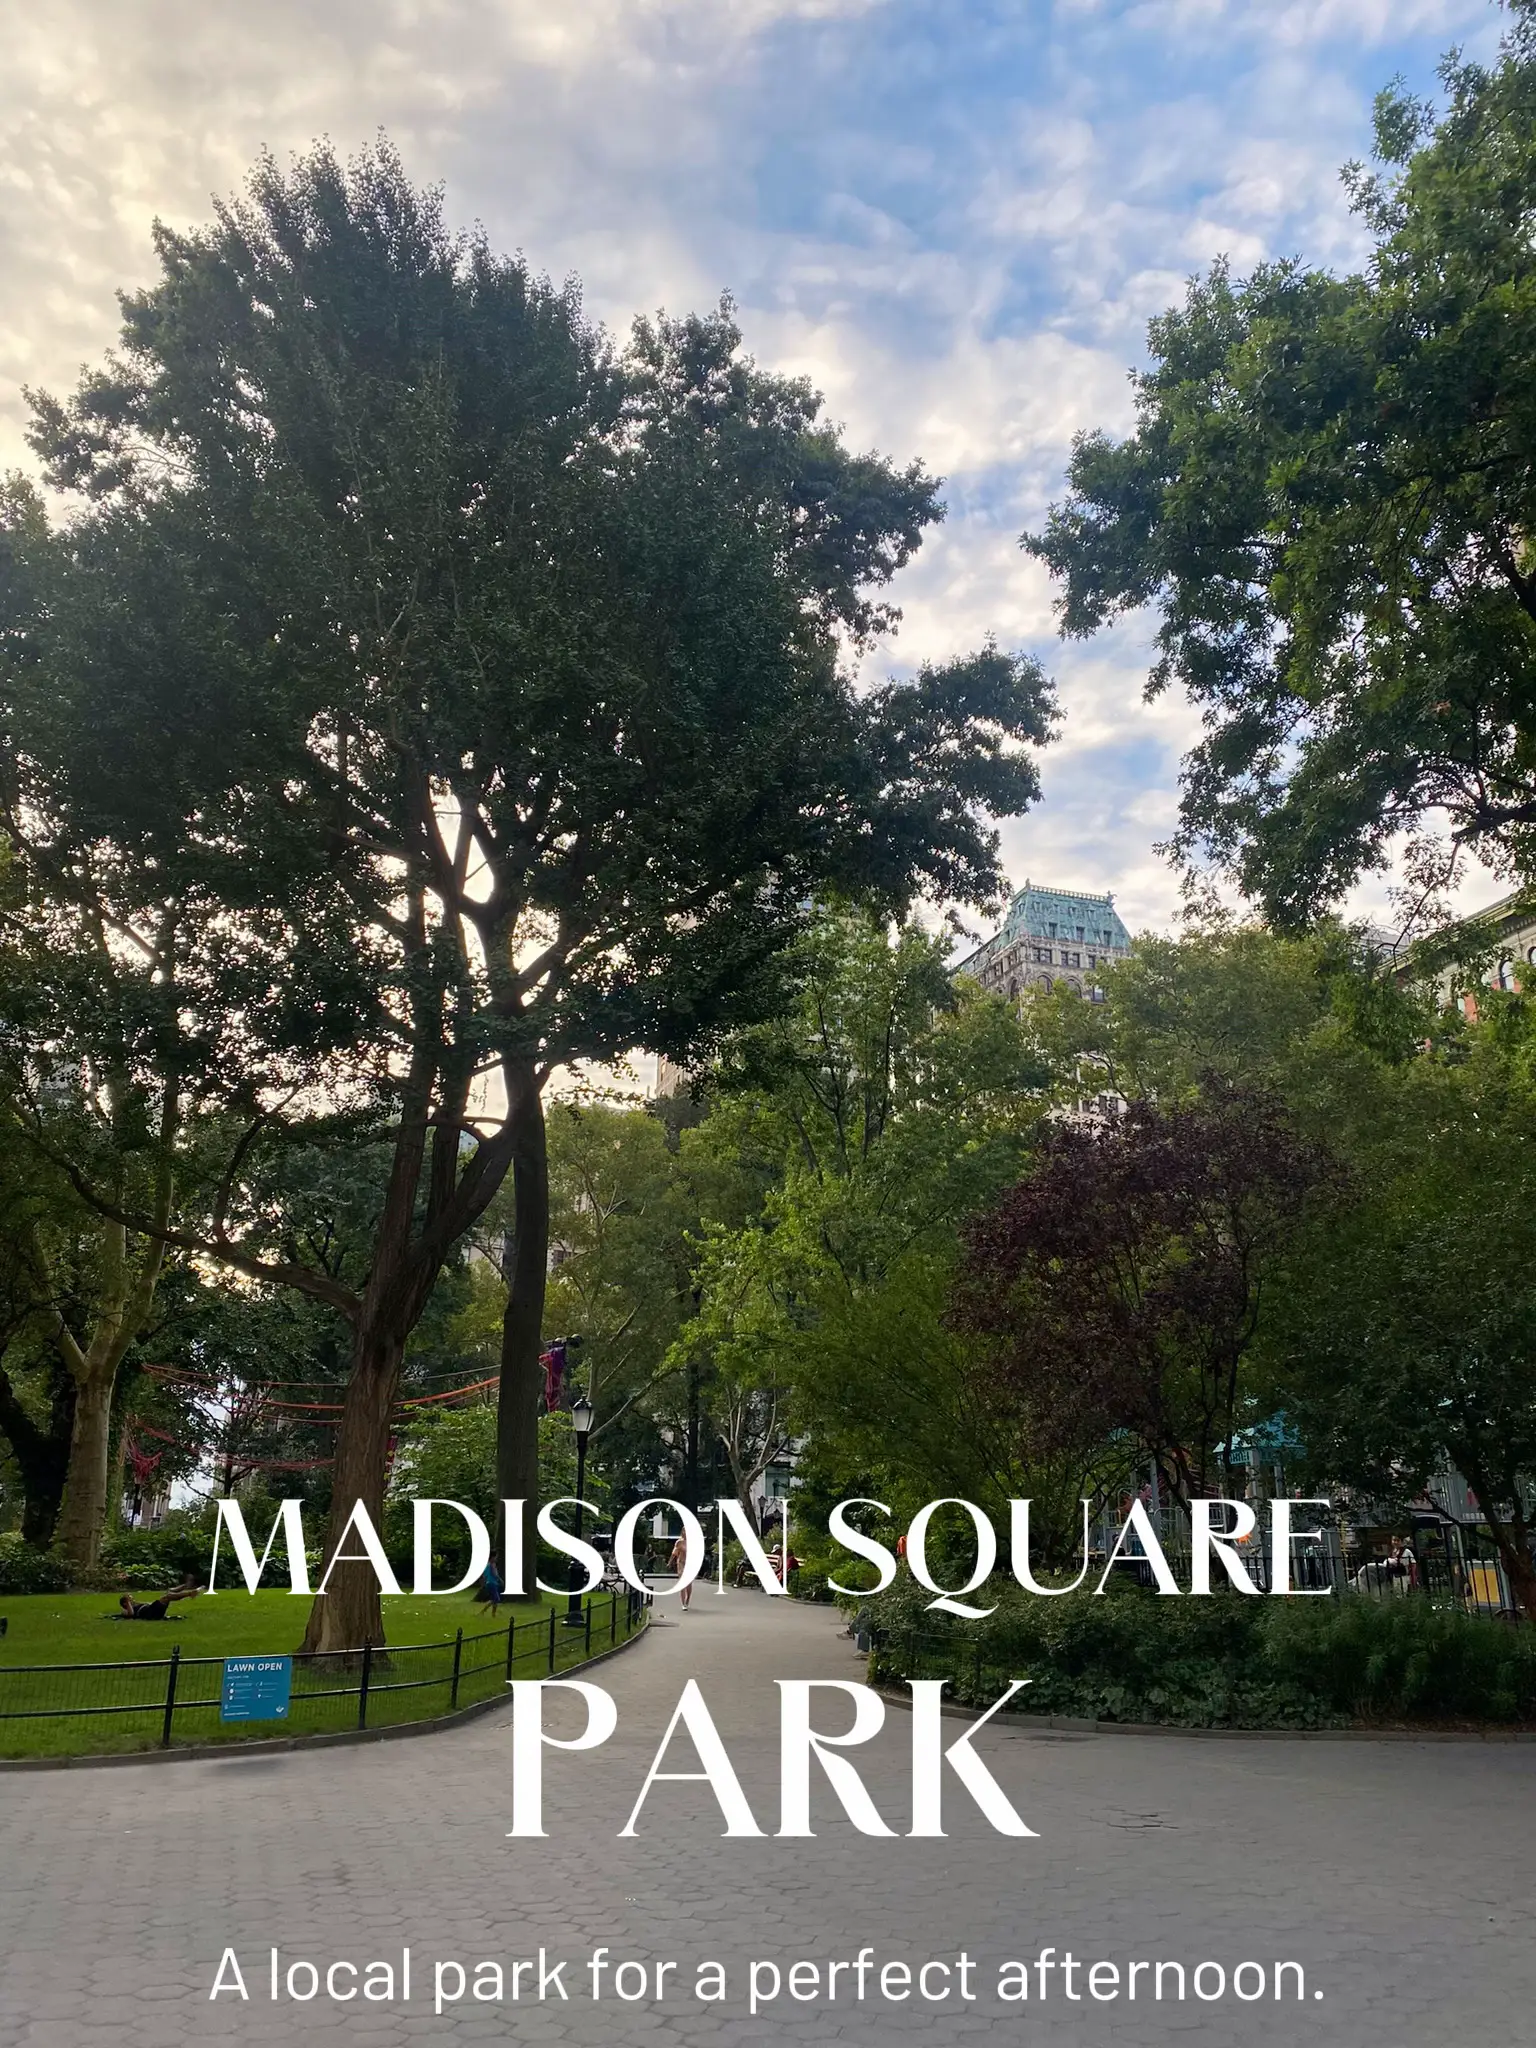 Madison Square Park 's images